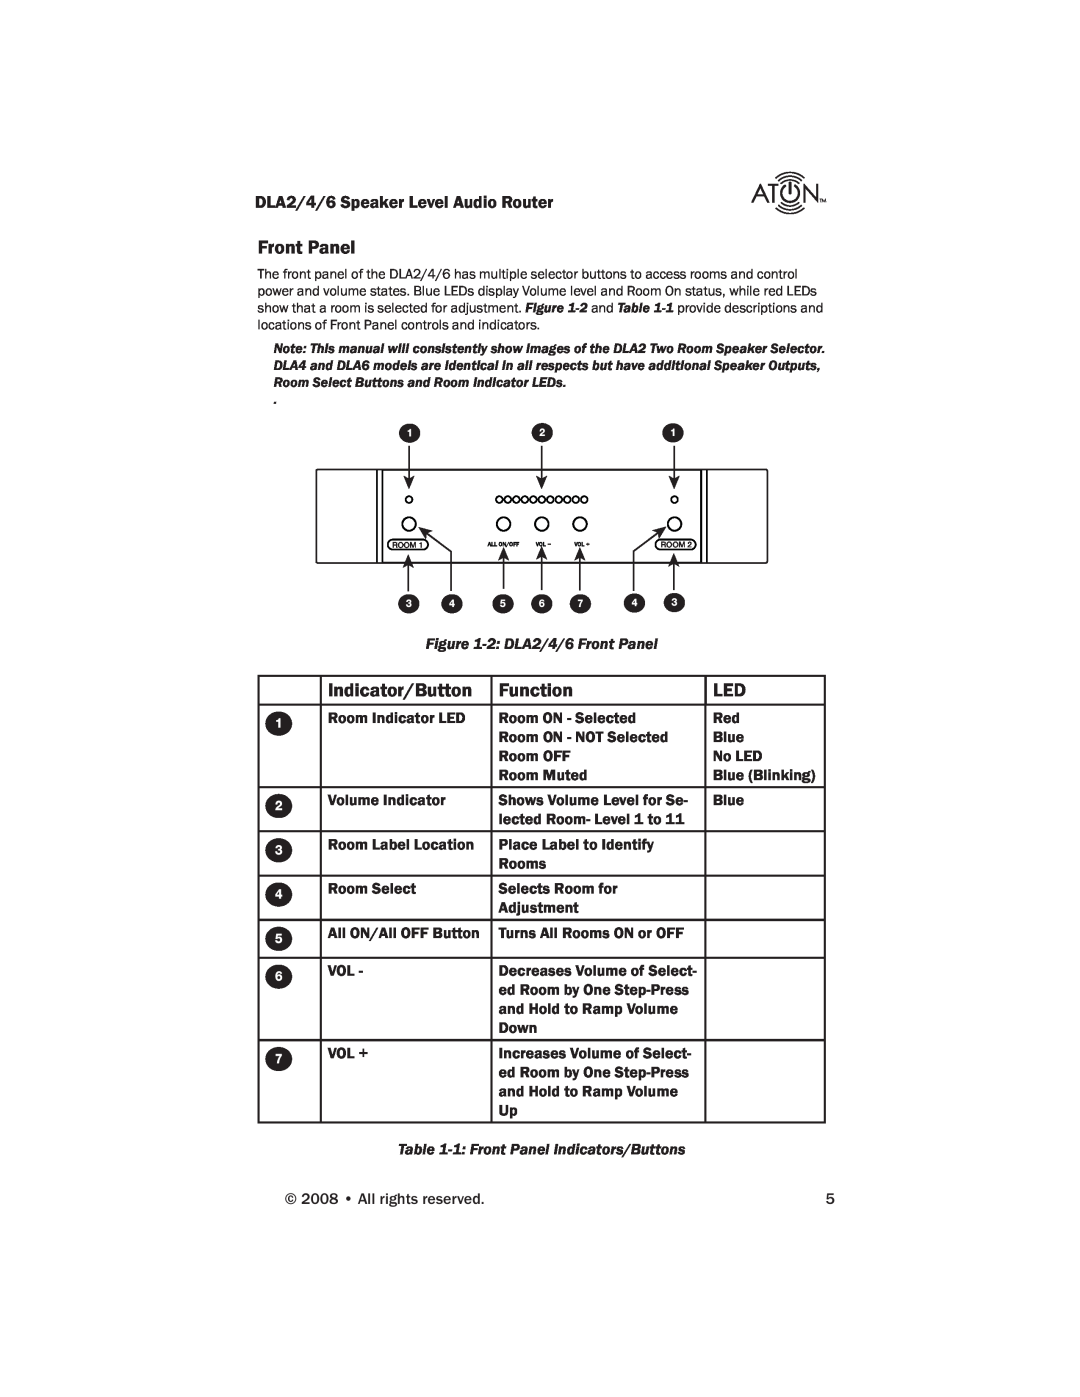 ATON DLA4, DLA6 manual Indicator/Button, Function, 2 DLA2/4/6 Front Panel, 1 Front Panel Indicators/Buttons 